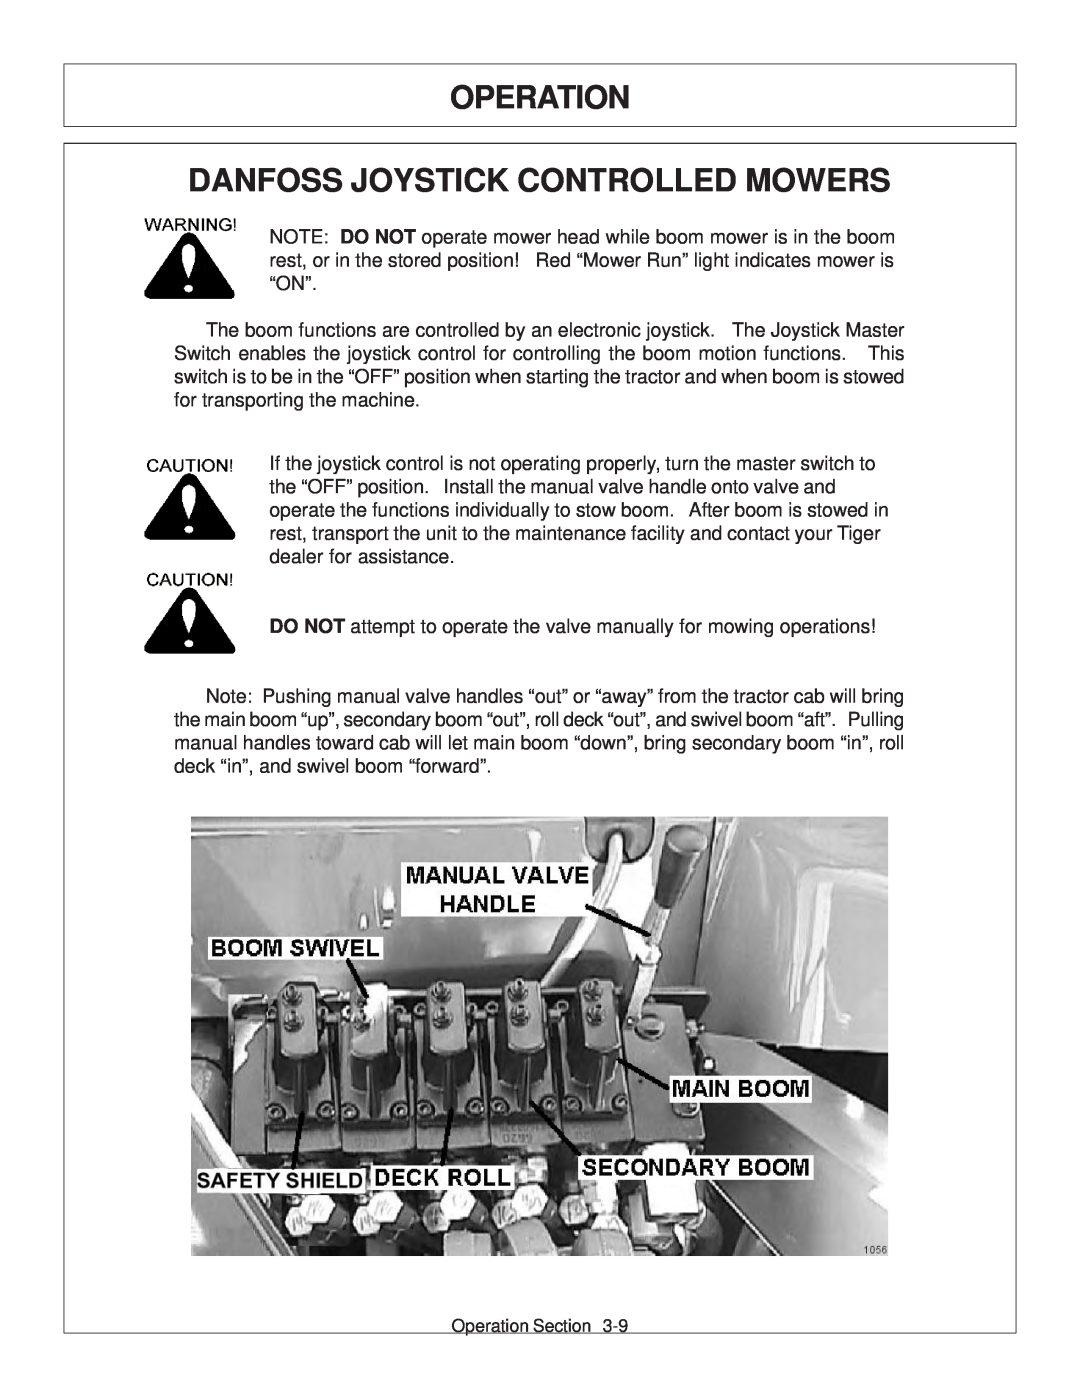 Tiger JD 62-6420 manual Operation Danfoss Joystick Controlled Mowers, Main Control Switch Box 